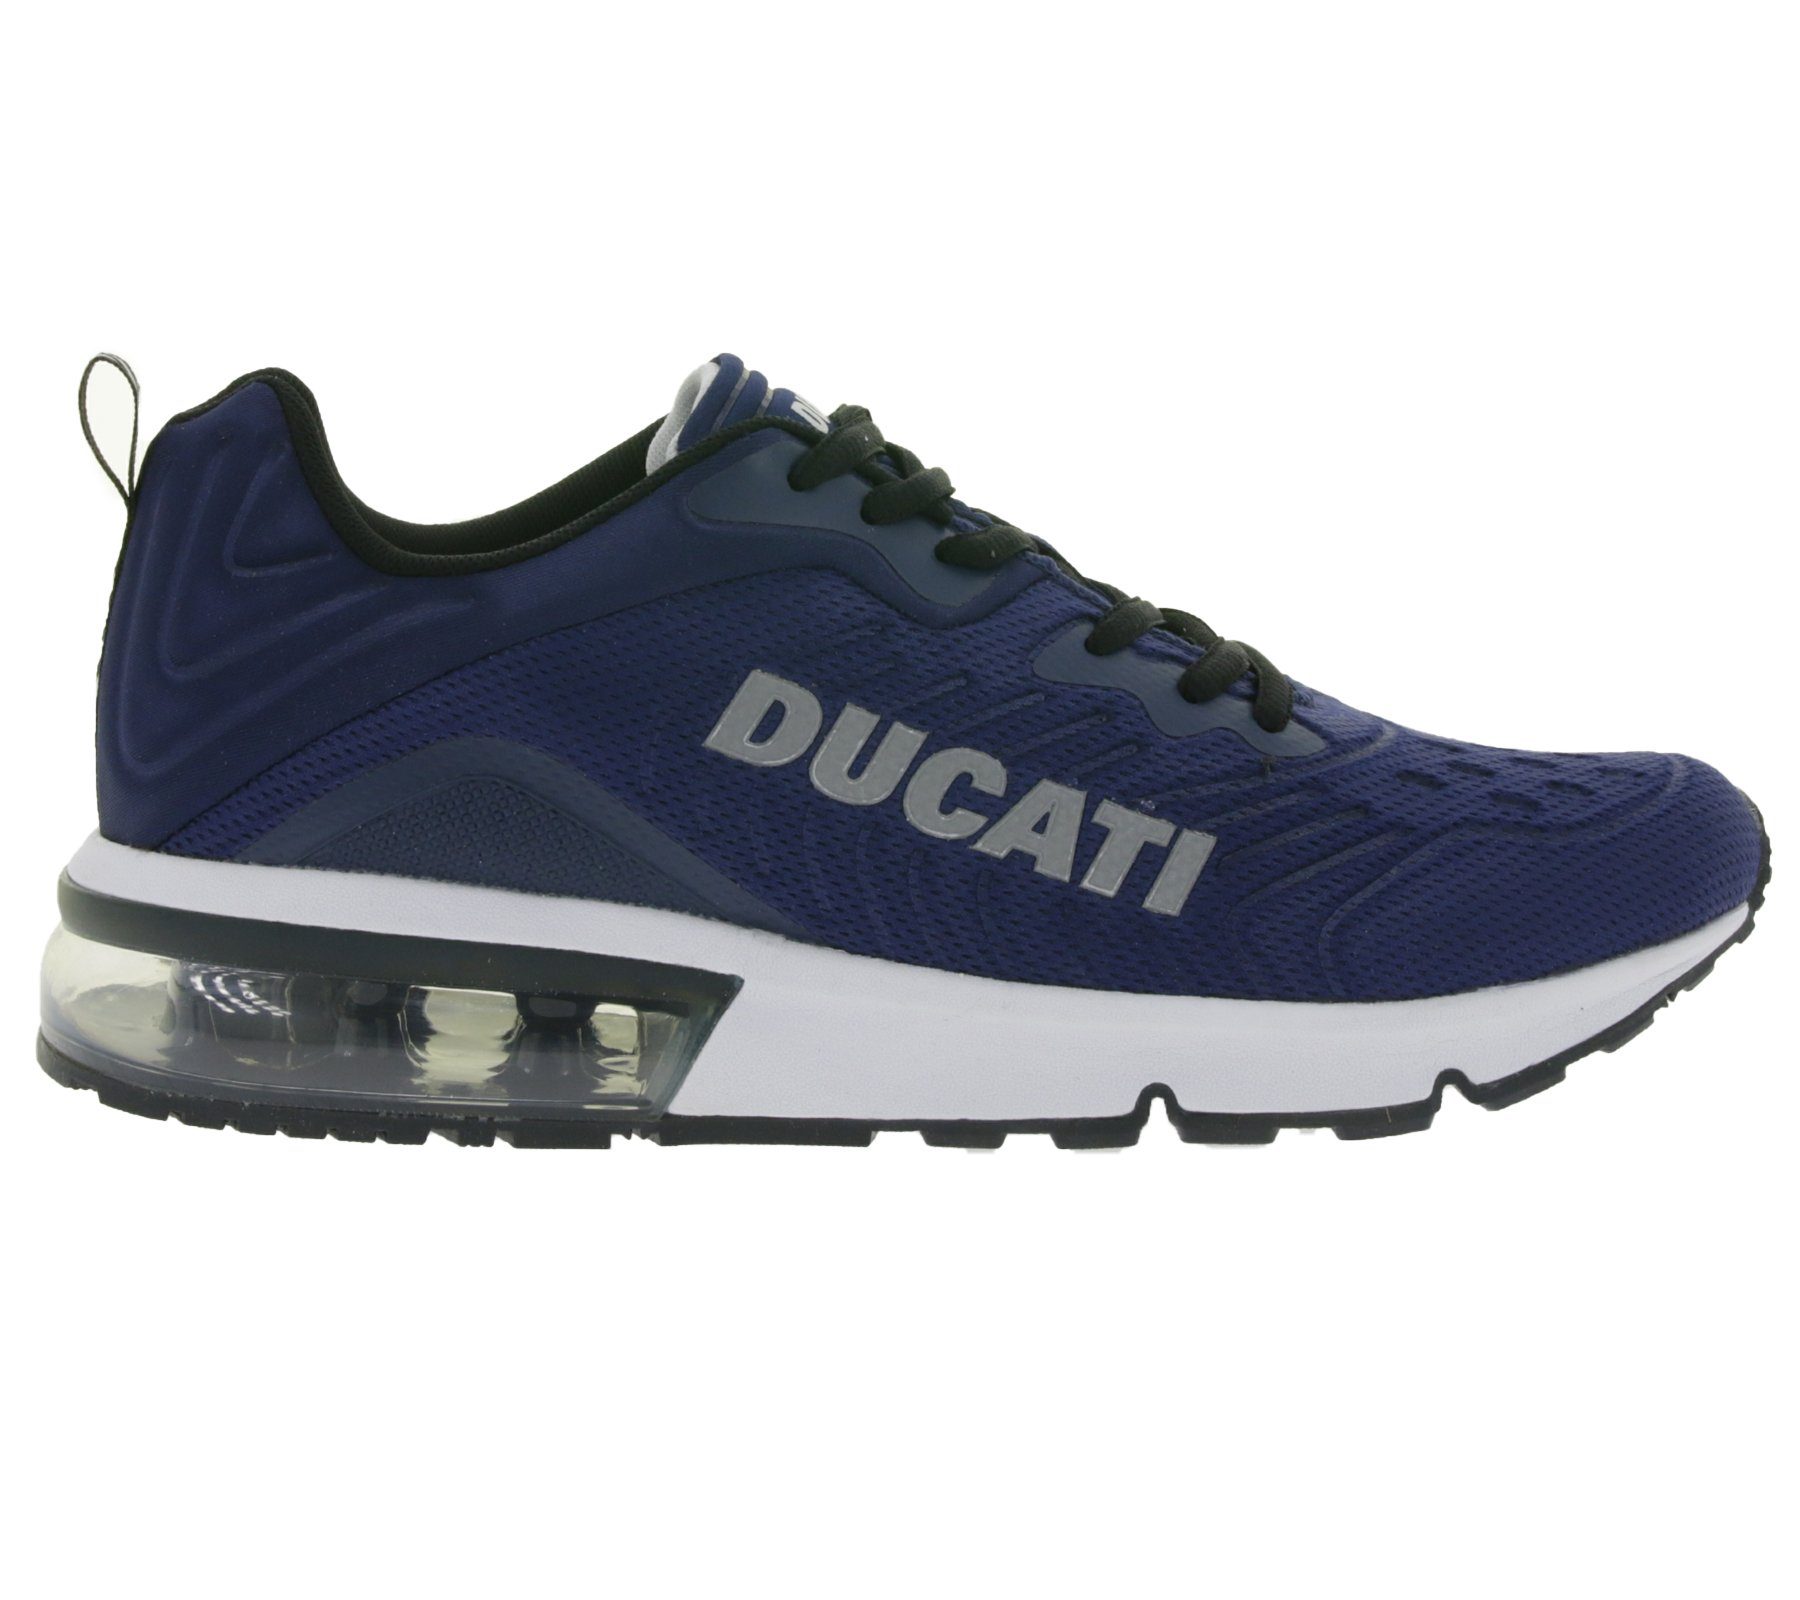 Ducati DUCATI Istanbul Herren Sneaker gepolsterte Turnschuhe DS440 11  Freizeit-Schuhe Navy/Weiß Sneaker